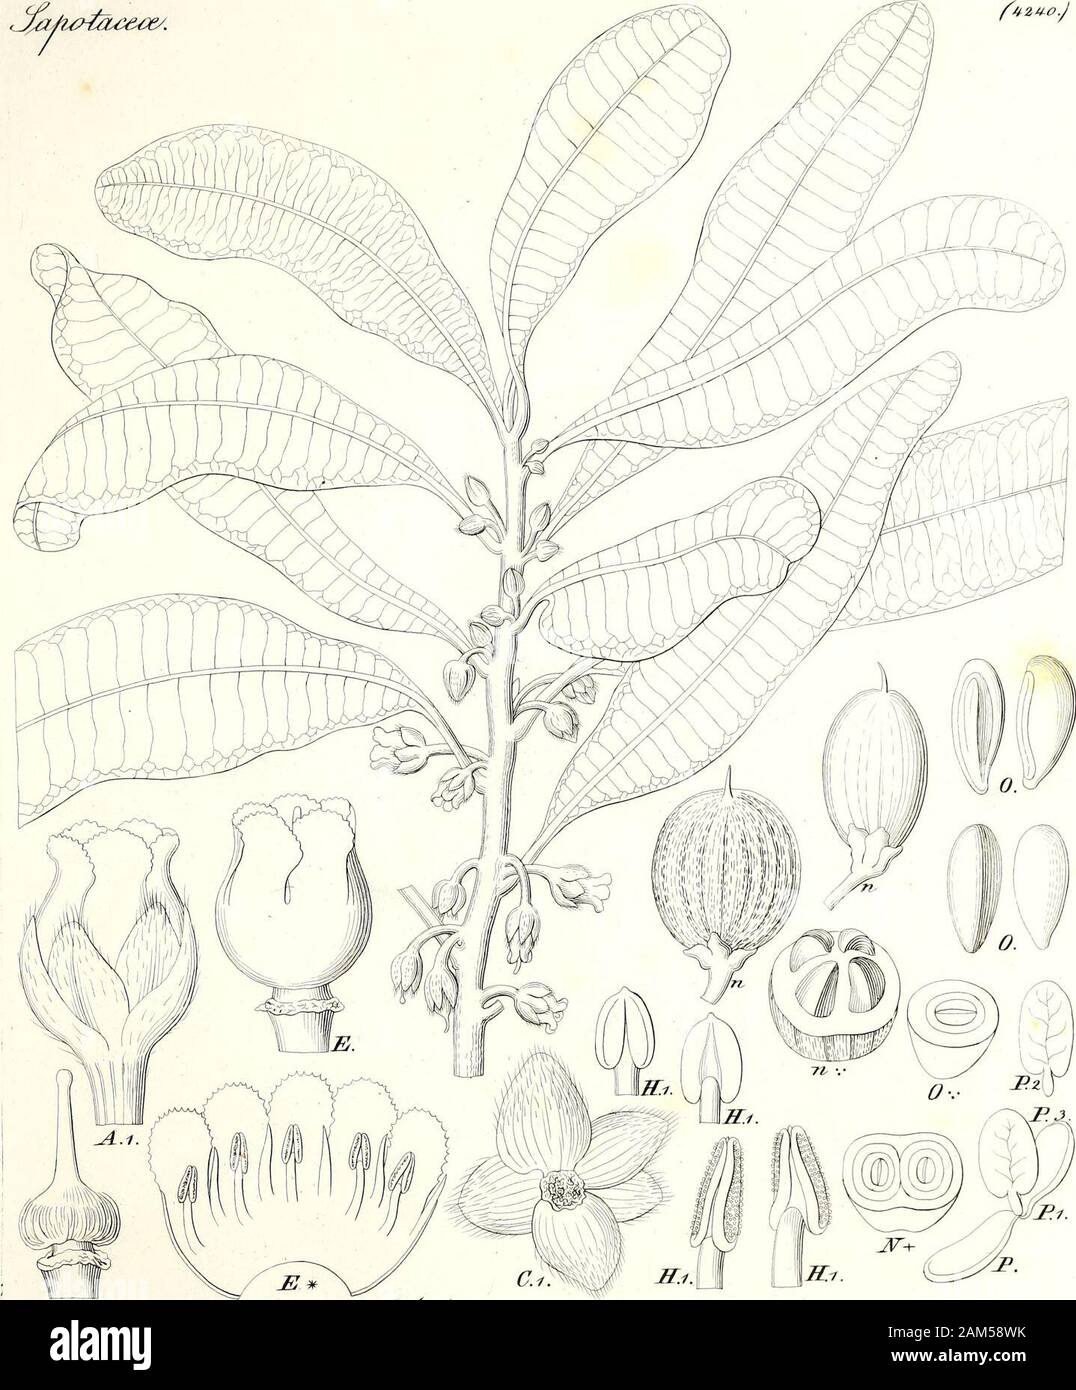 Iconographia generum Plantarum. & & & 0 &?* £. /&Gt; v V.?? ?. J&gt;&6 Suz^-= Fj &-/a 3 J. & 0 i&gt; U49 T06 U Stockfoto